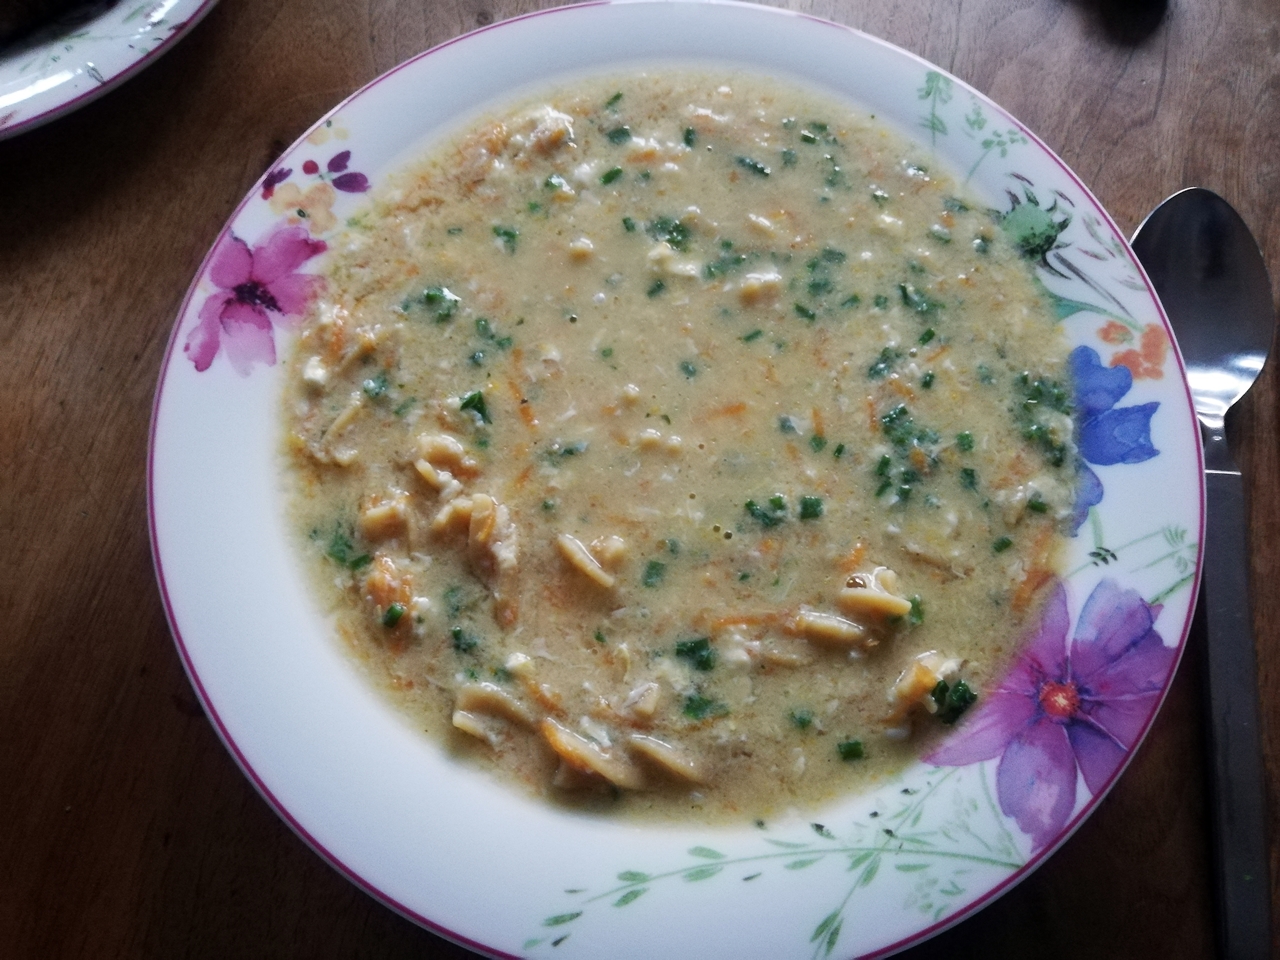 Kraftsuppe mit Eierflocken, Rüebli und Kichererbsen Pasta- Power soup with egg flakes, carrots and chickpeas pasta